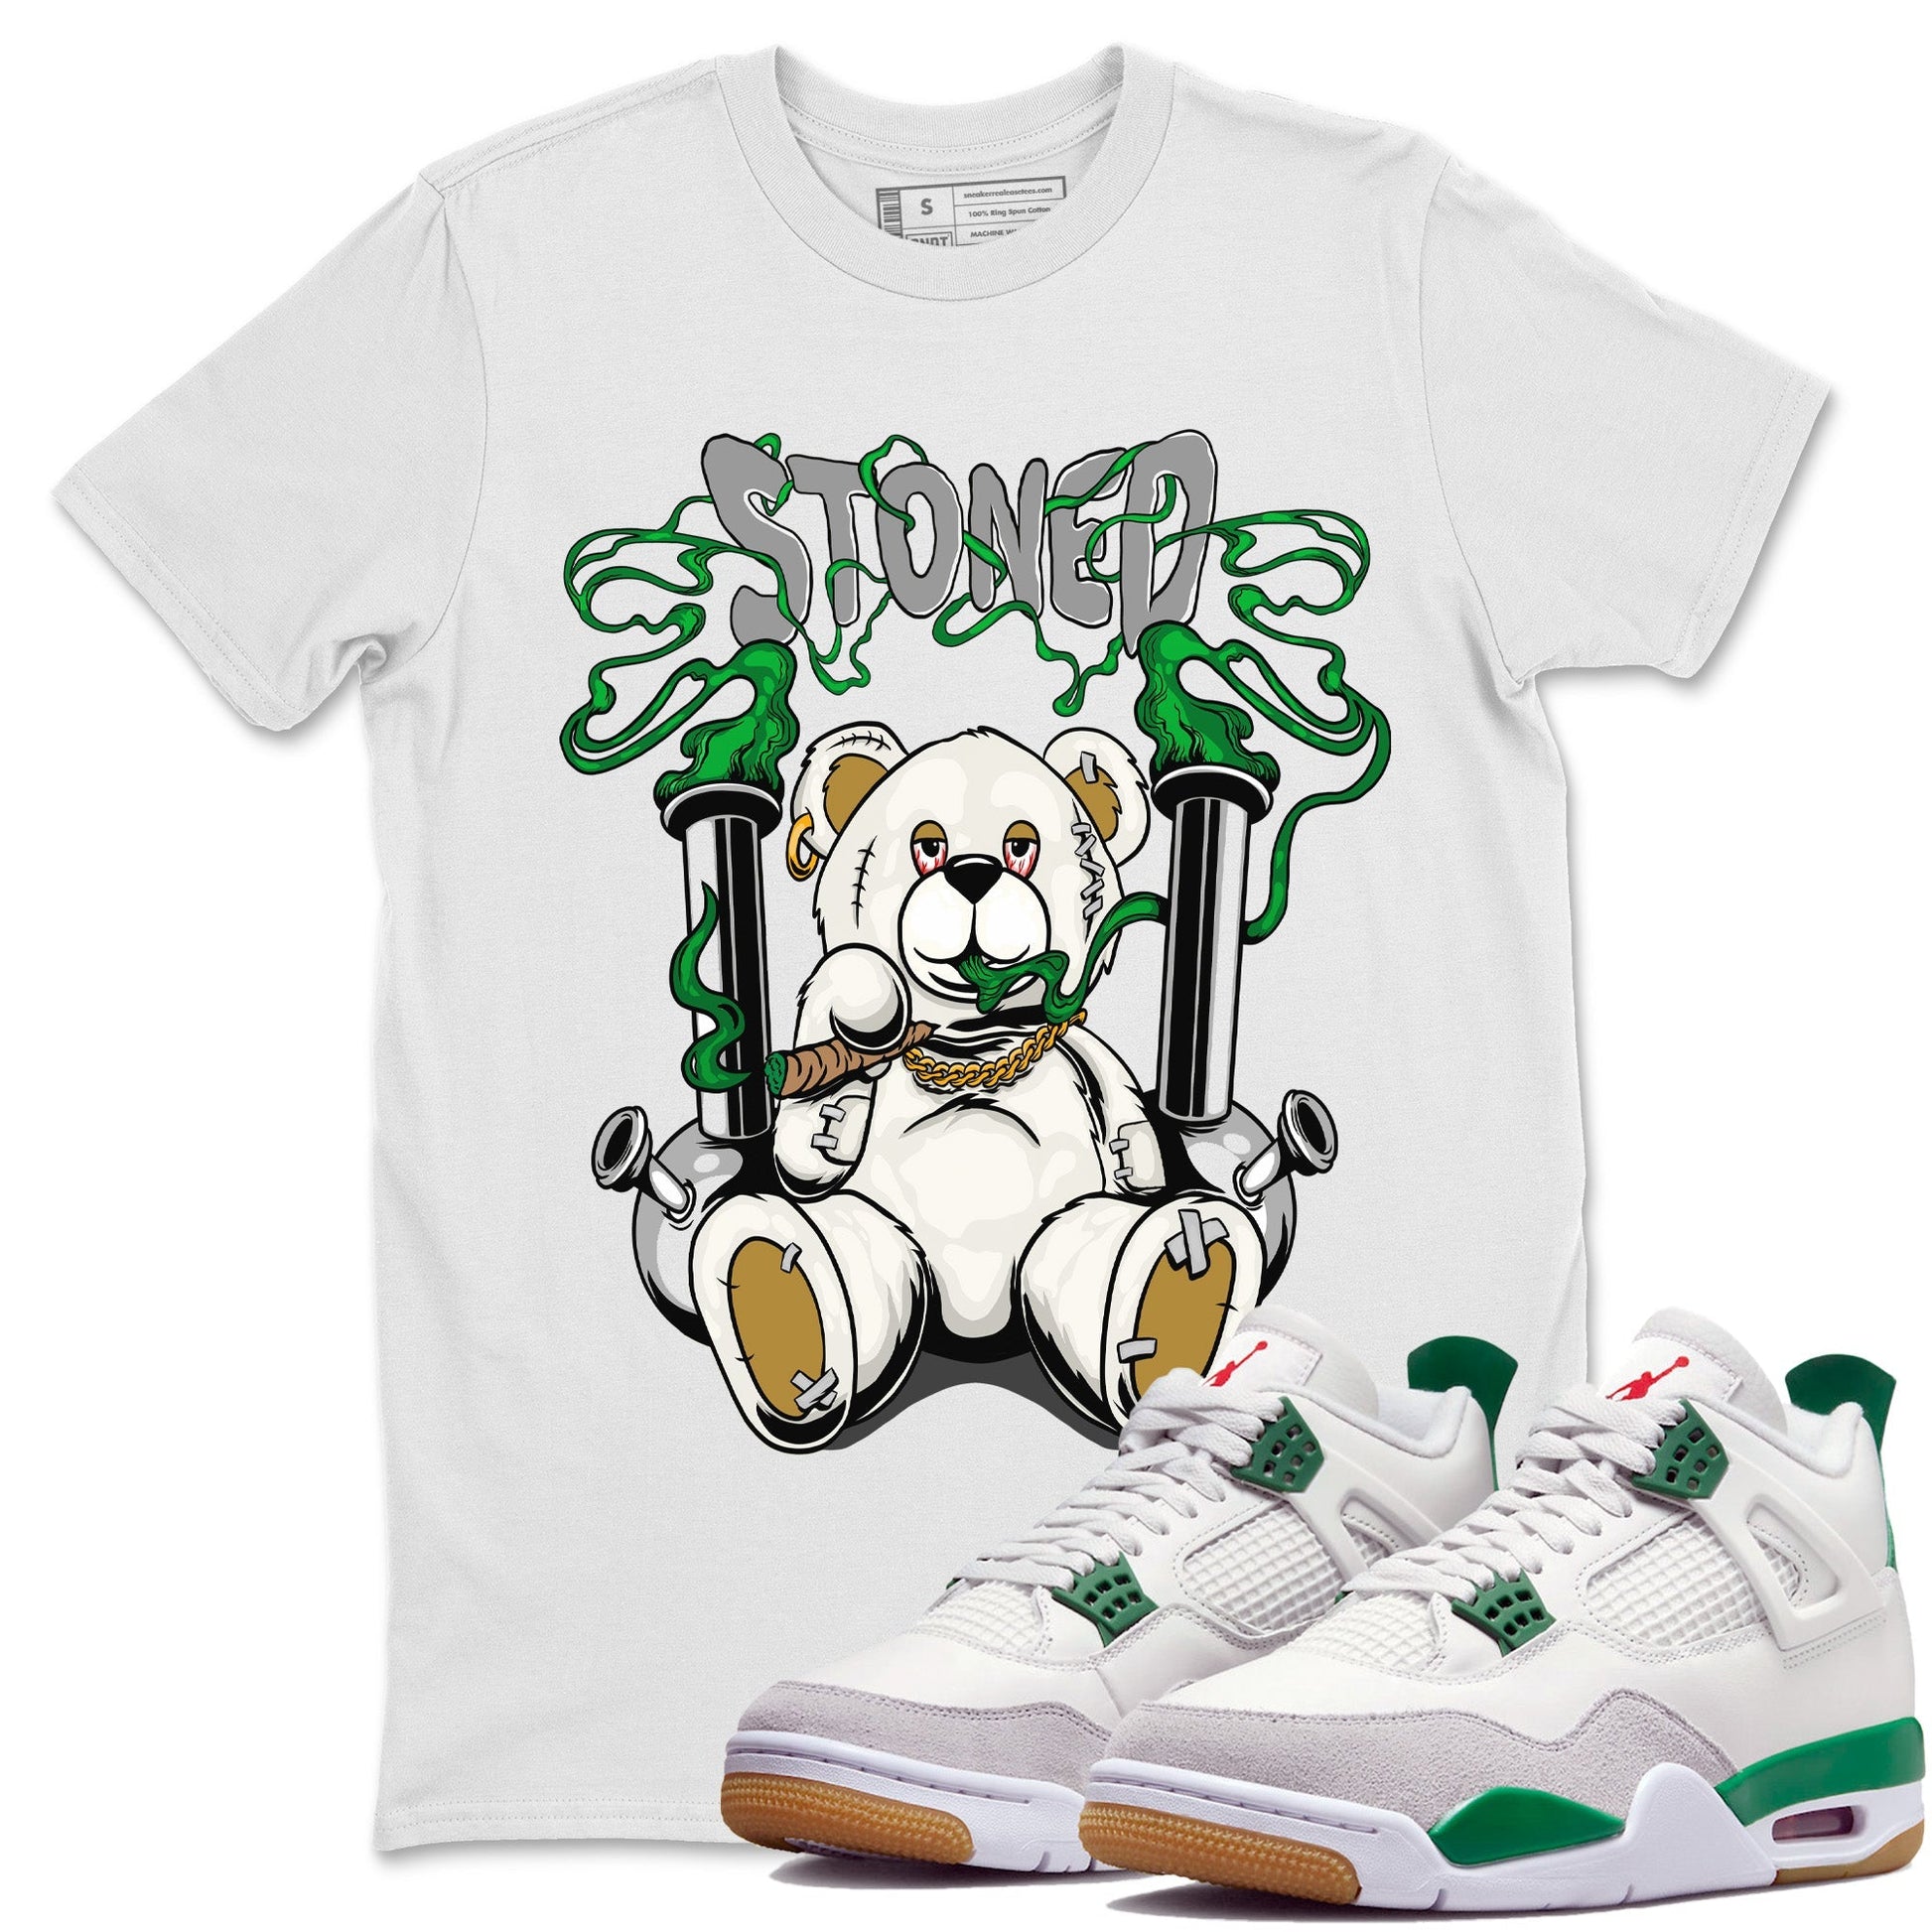 Jordan 4 Pine Green SB Sneaker Match Tees Stoned Bear Sneaker Tees Nike SB Air Jordan 4 Pine Green Sneaker Tees Sneaker Release Shirts Unisex Shirts White 1